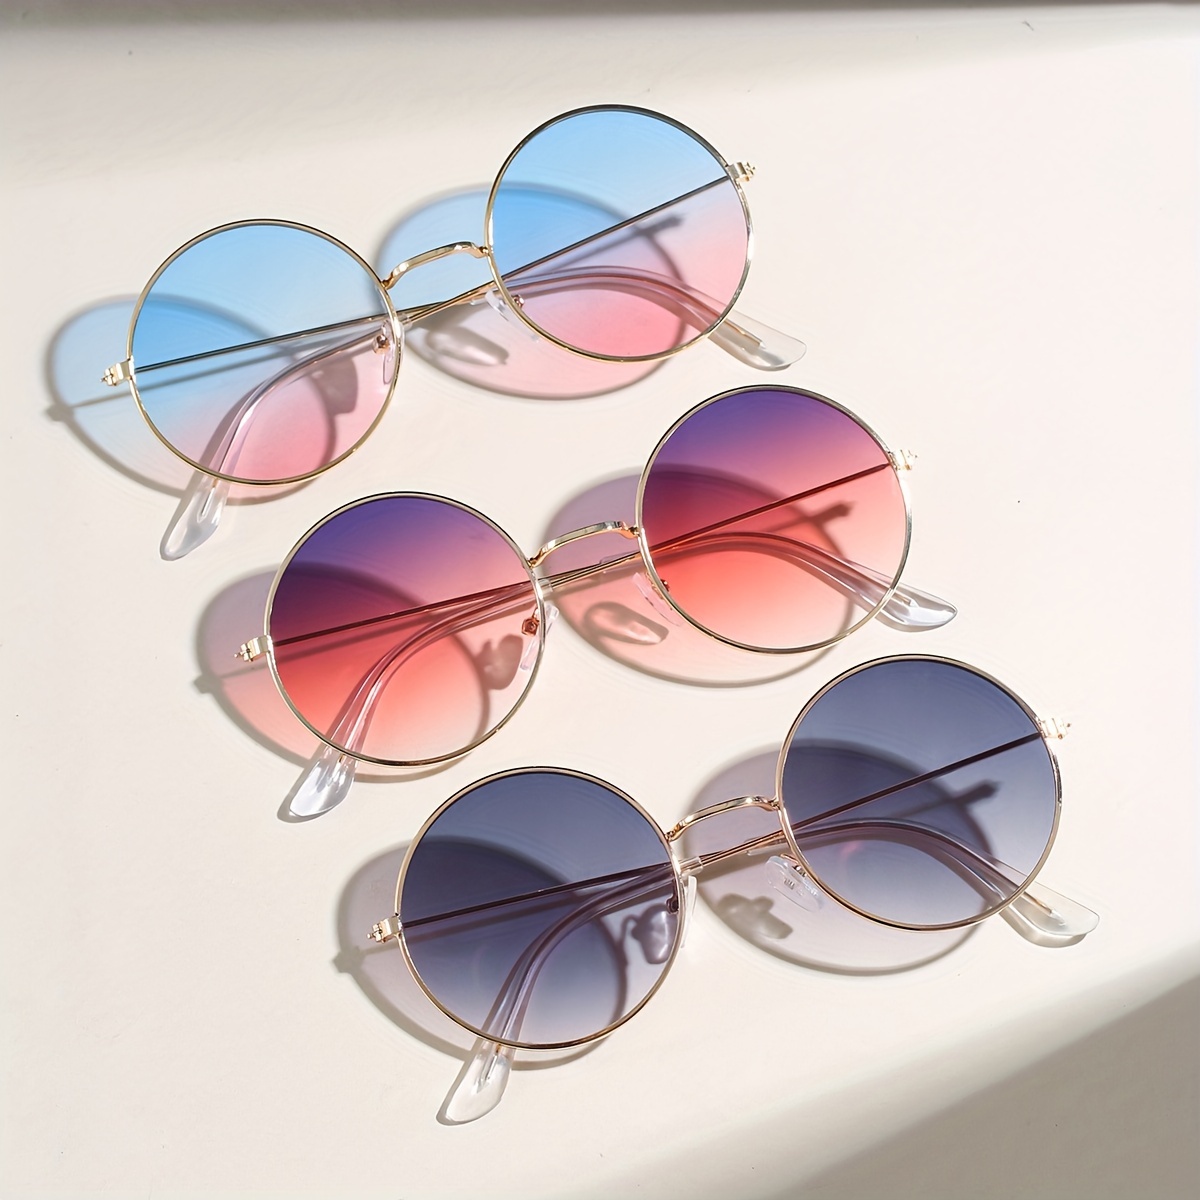 

3pcs Women's And Men's Round Vintage Glasses Metal Frame Fashion Decorative Sun Visors - Gradient Fantasy Ocean Color Series